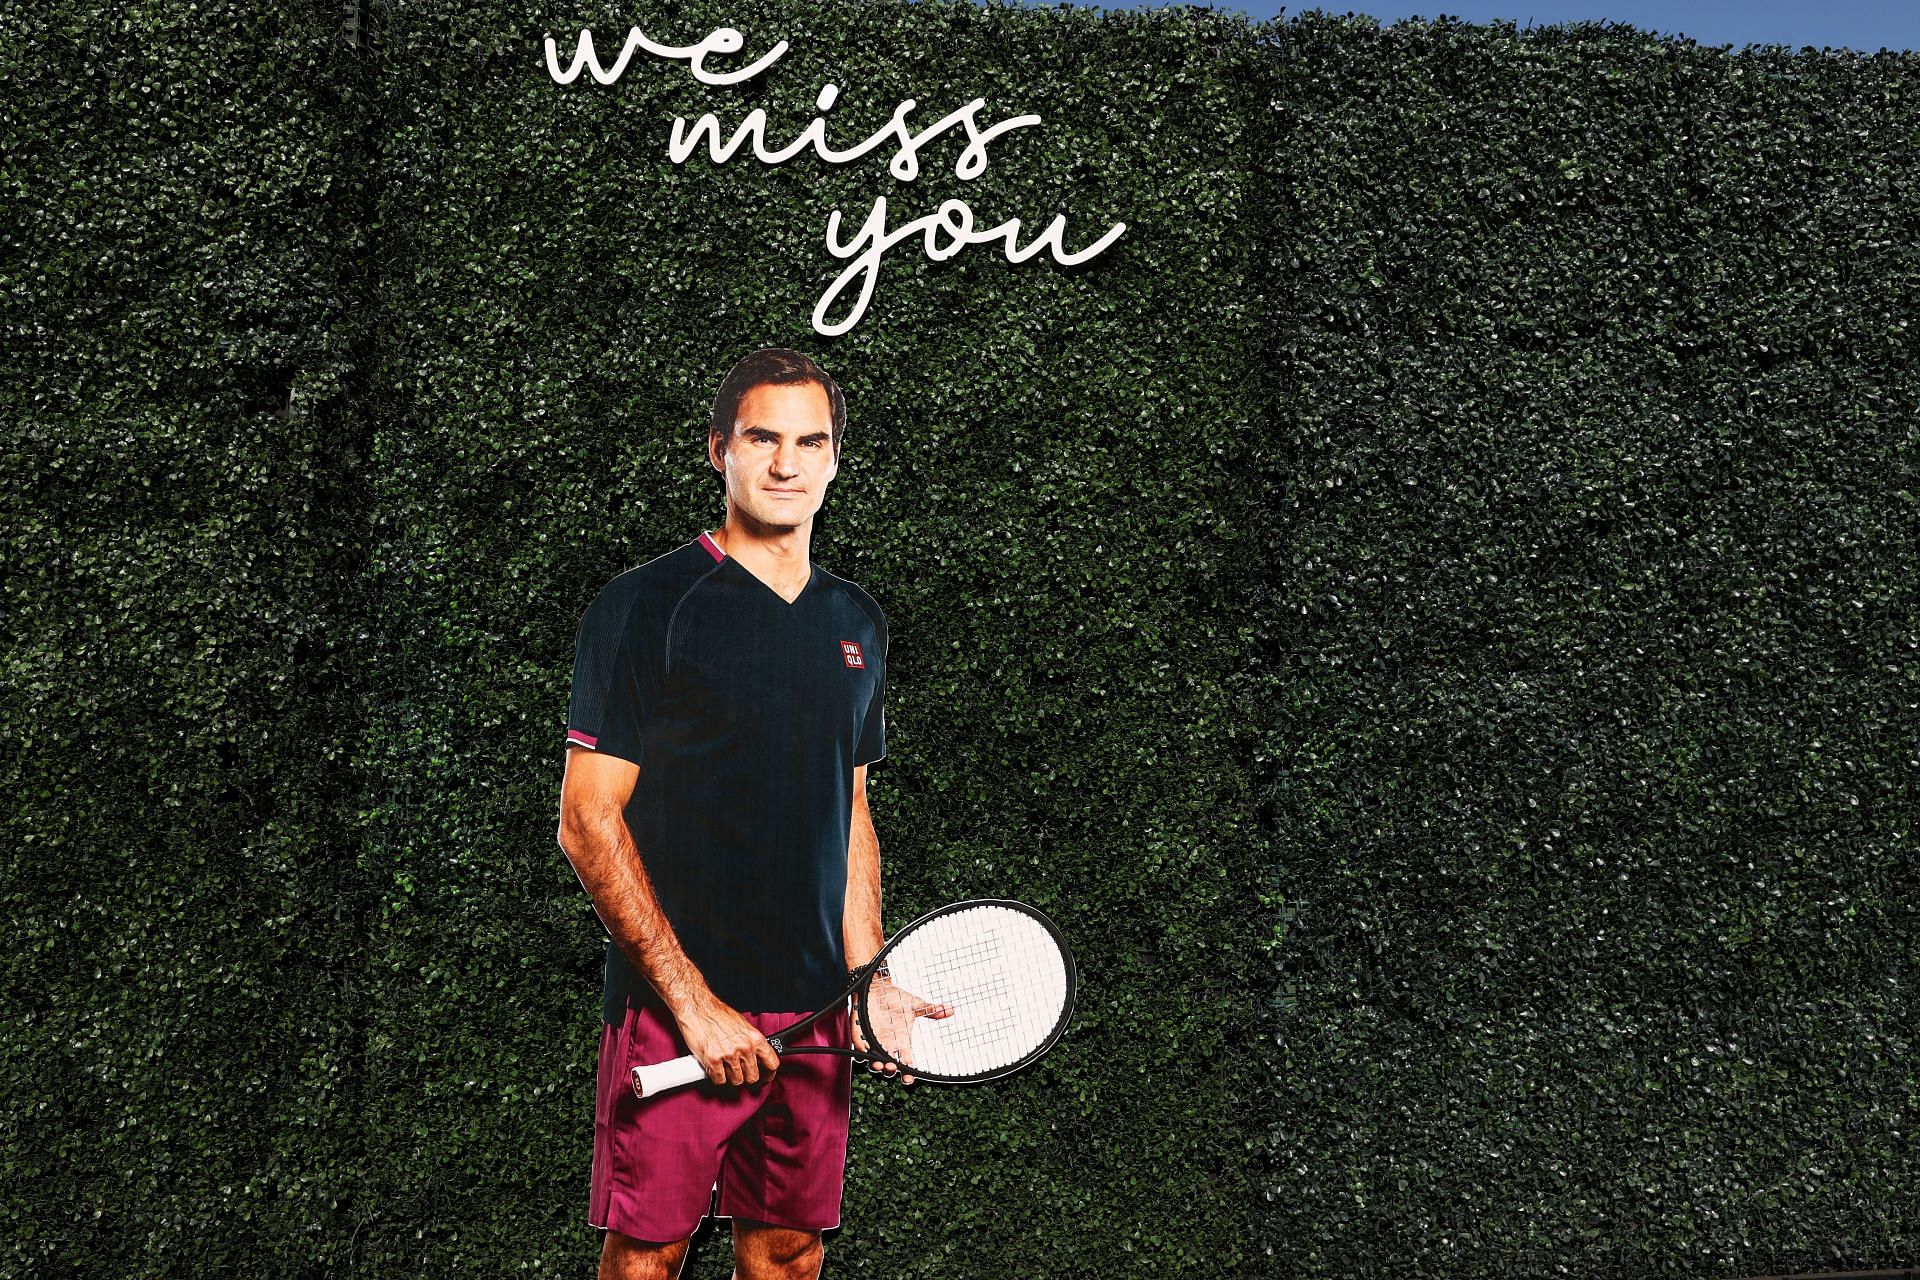 An artwork of Roger Federer at the BNP Paribas Open